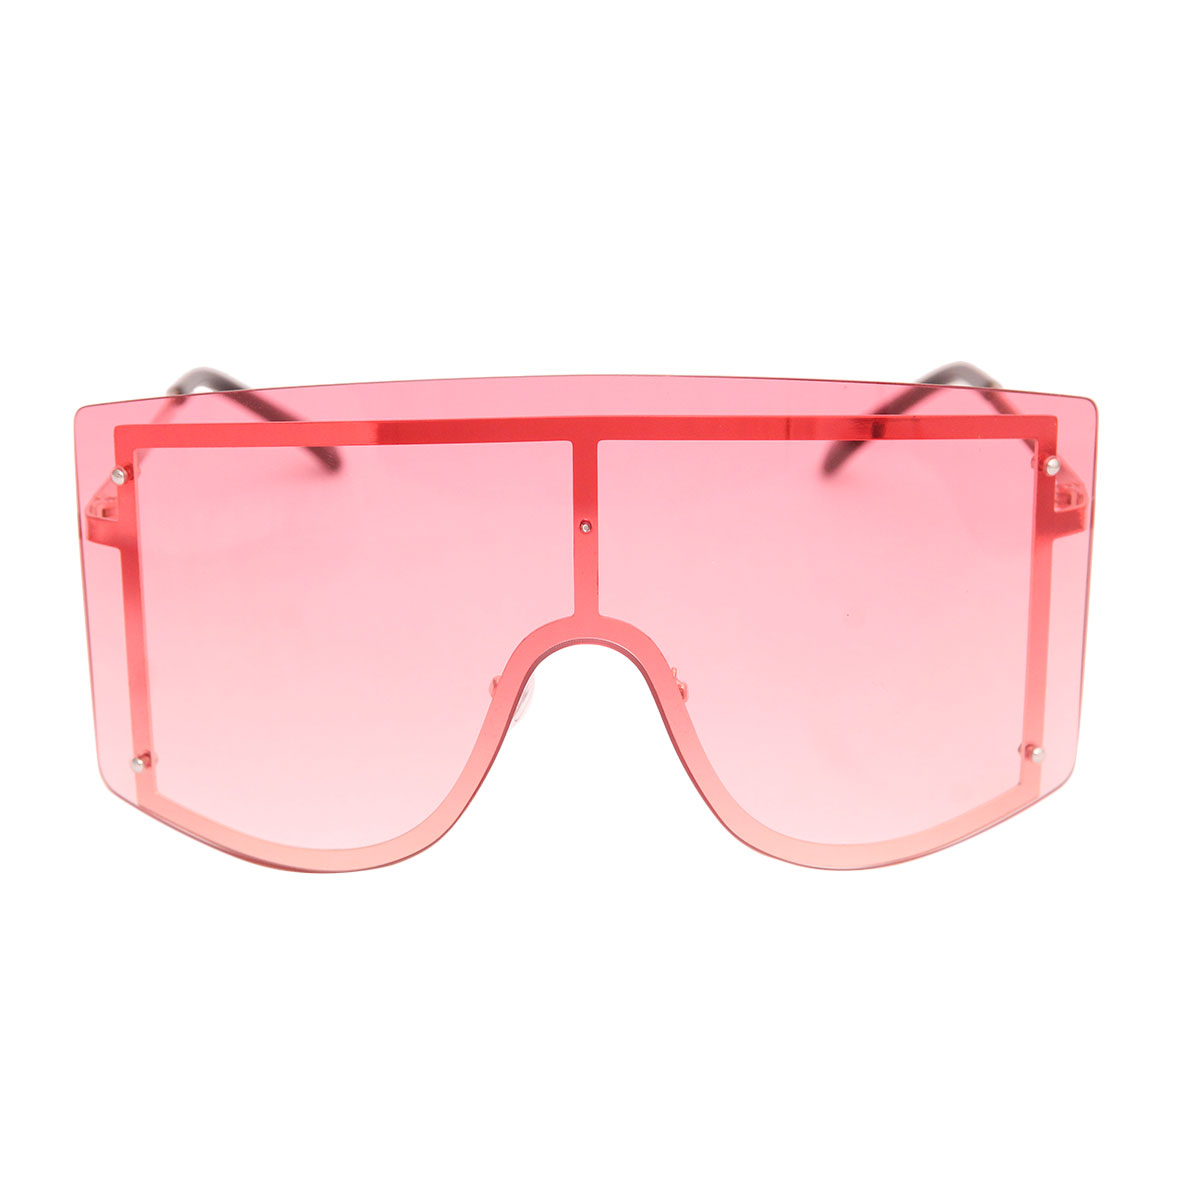 Rosy Outlook: Signature Shield Sunglasses